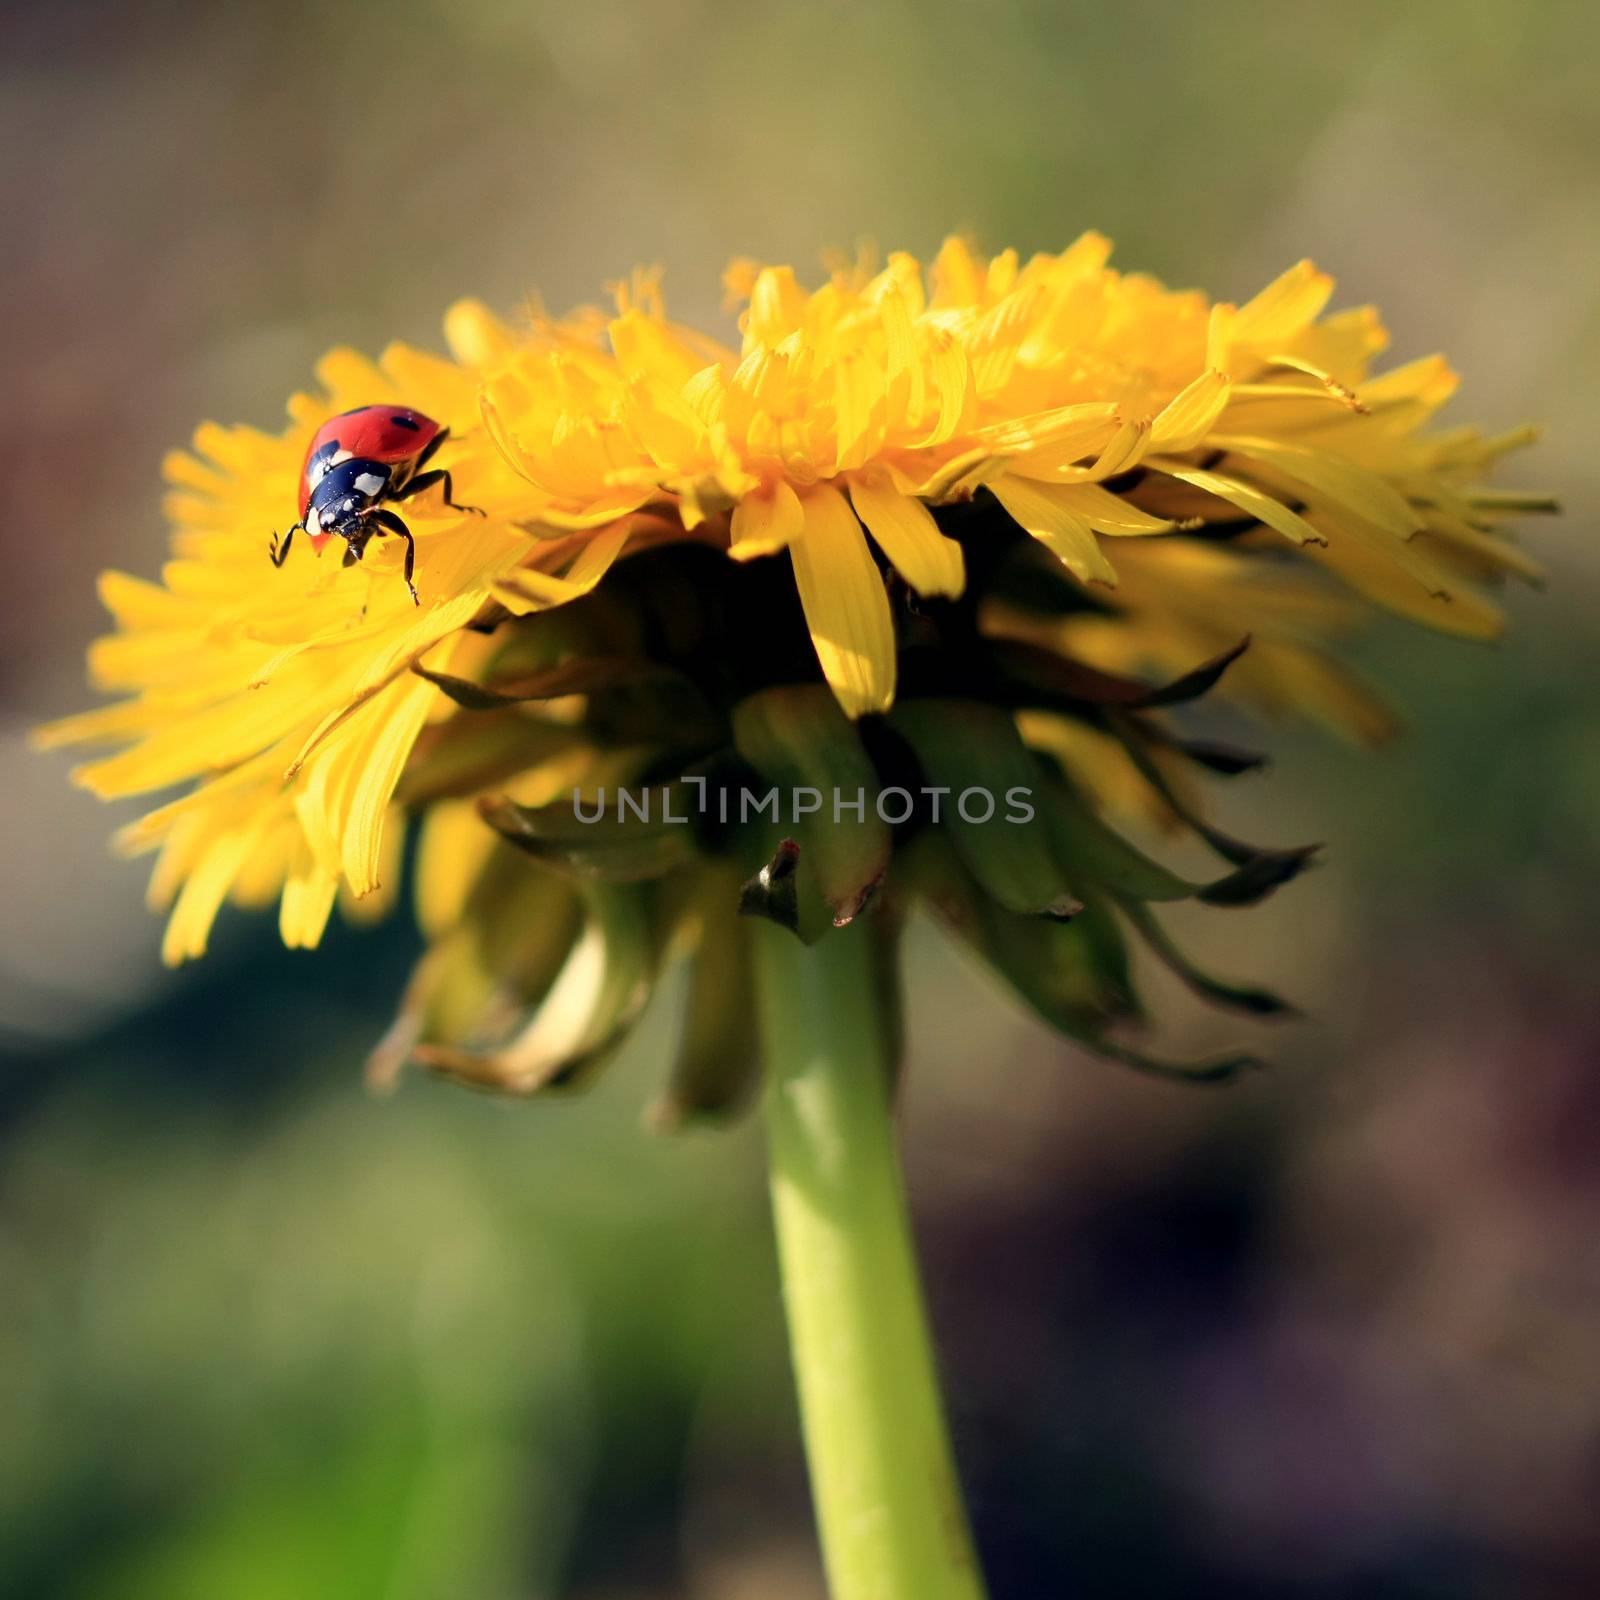 Colorful ladybug crawling on a yellow dandelion